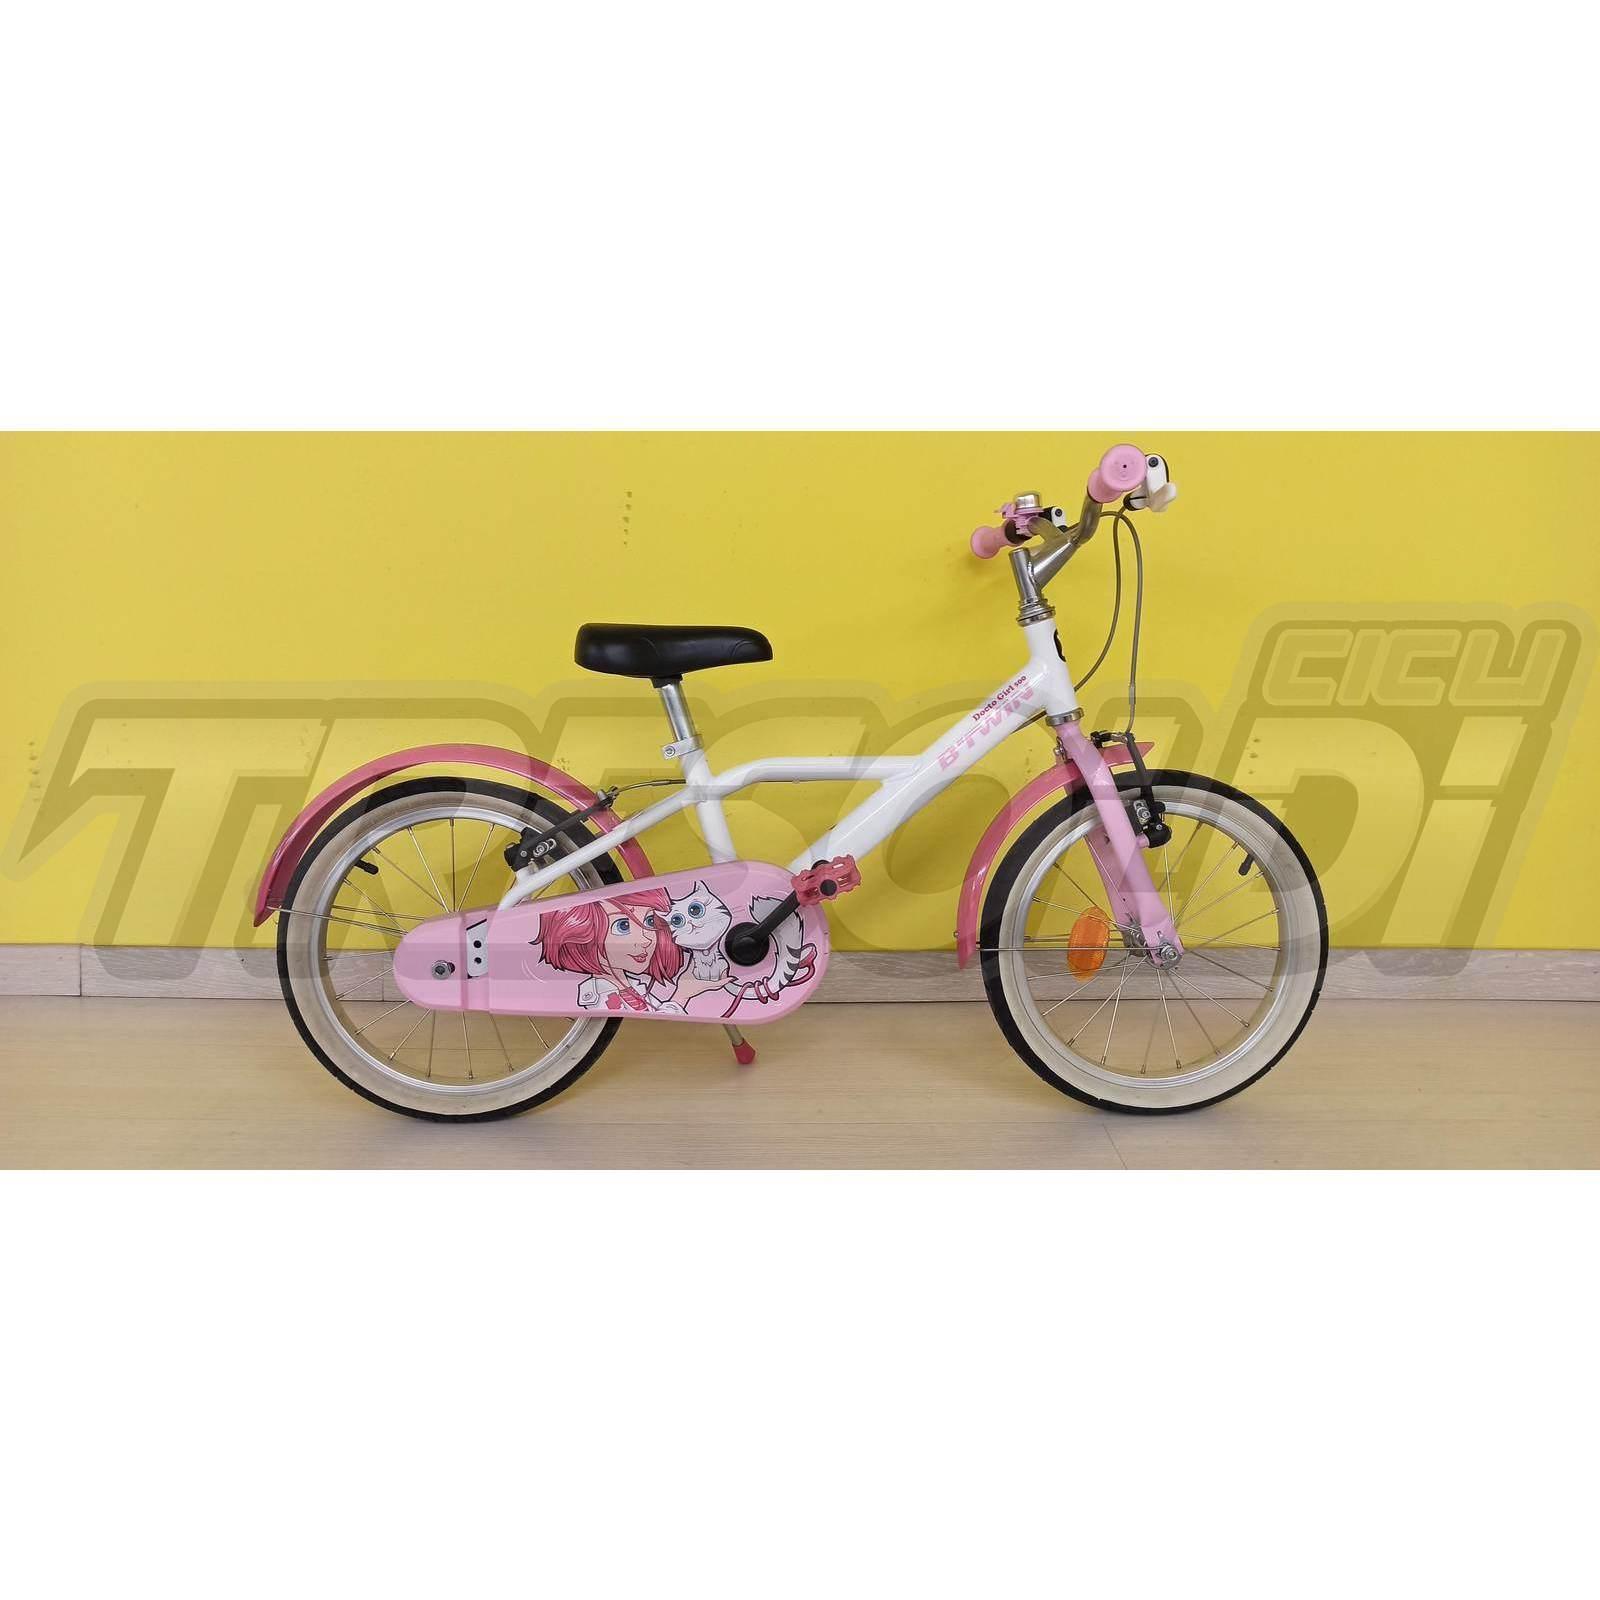 Occasione: Bici Bimba D 16" 1v Bianco/rosa